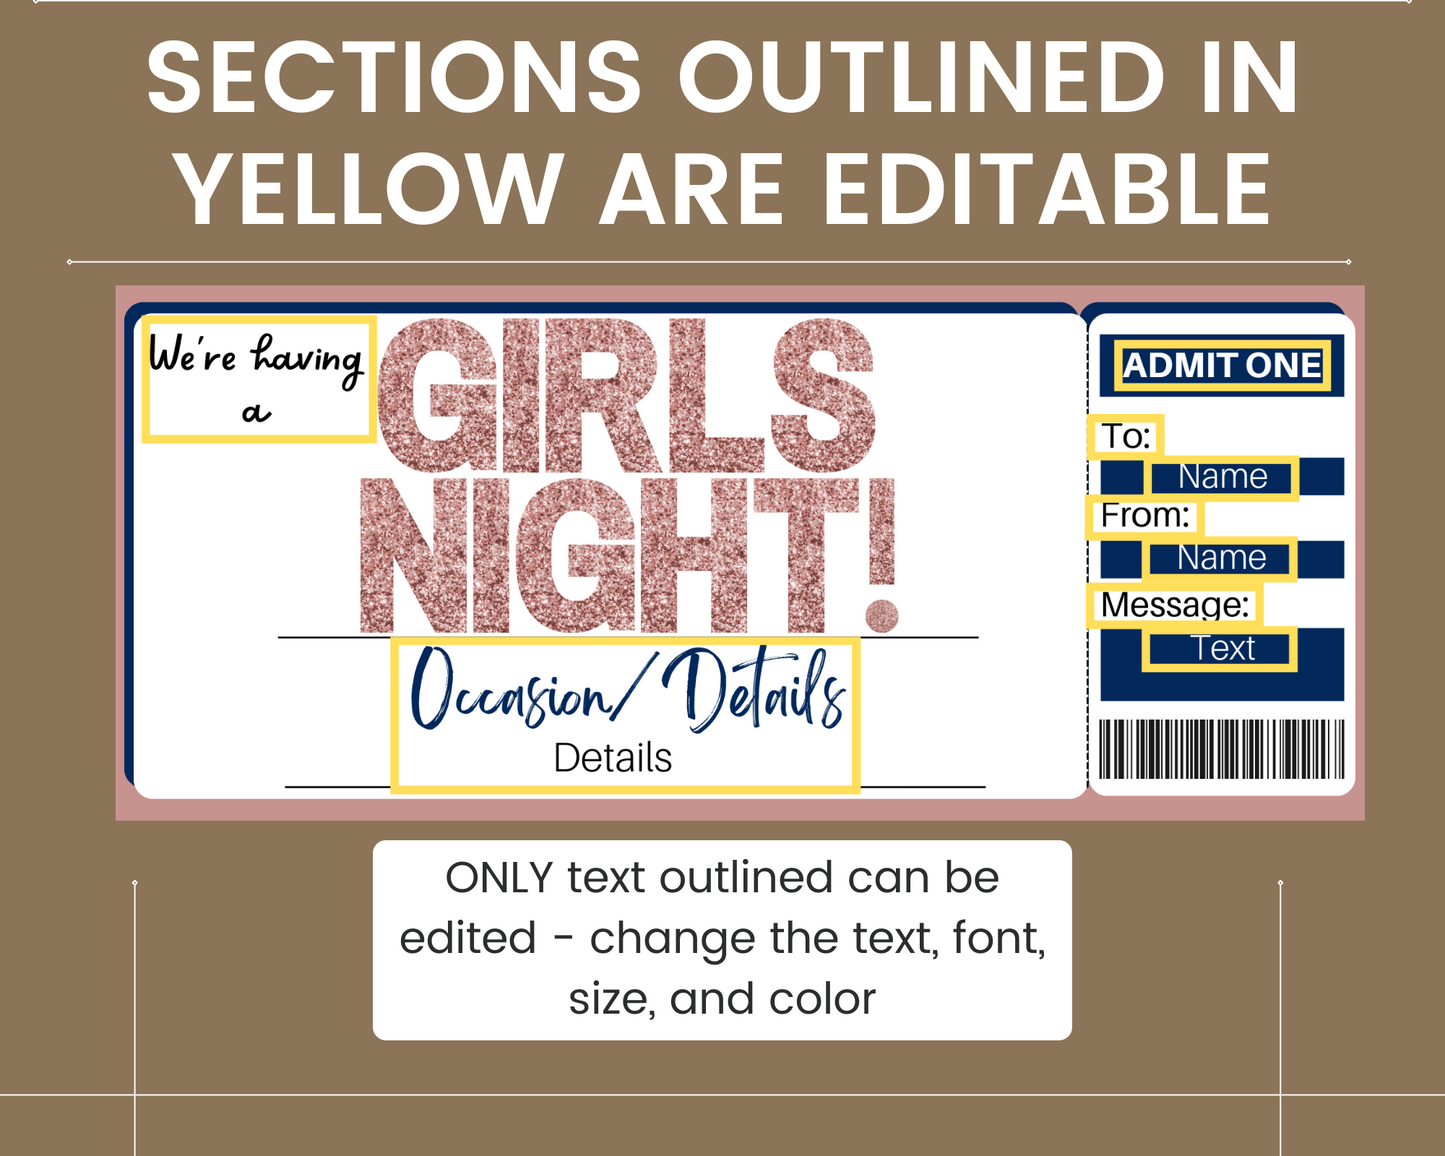 Girls Night Gift Certificate Template